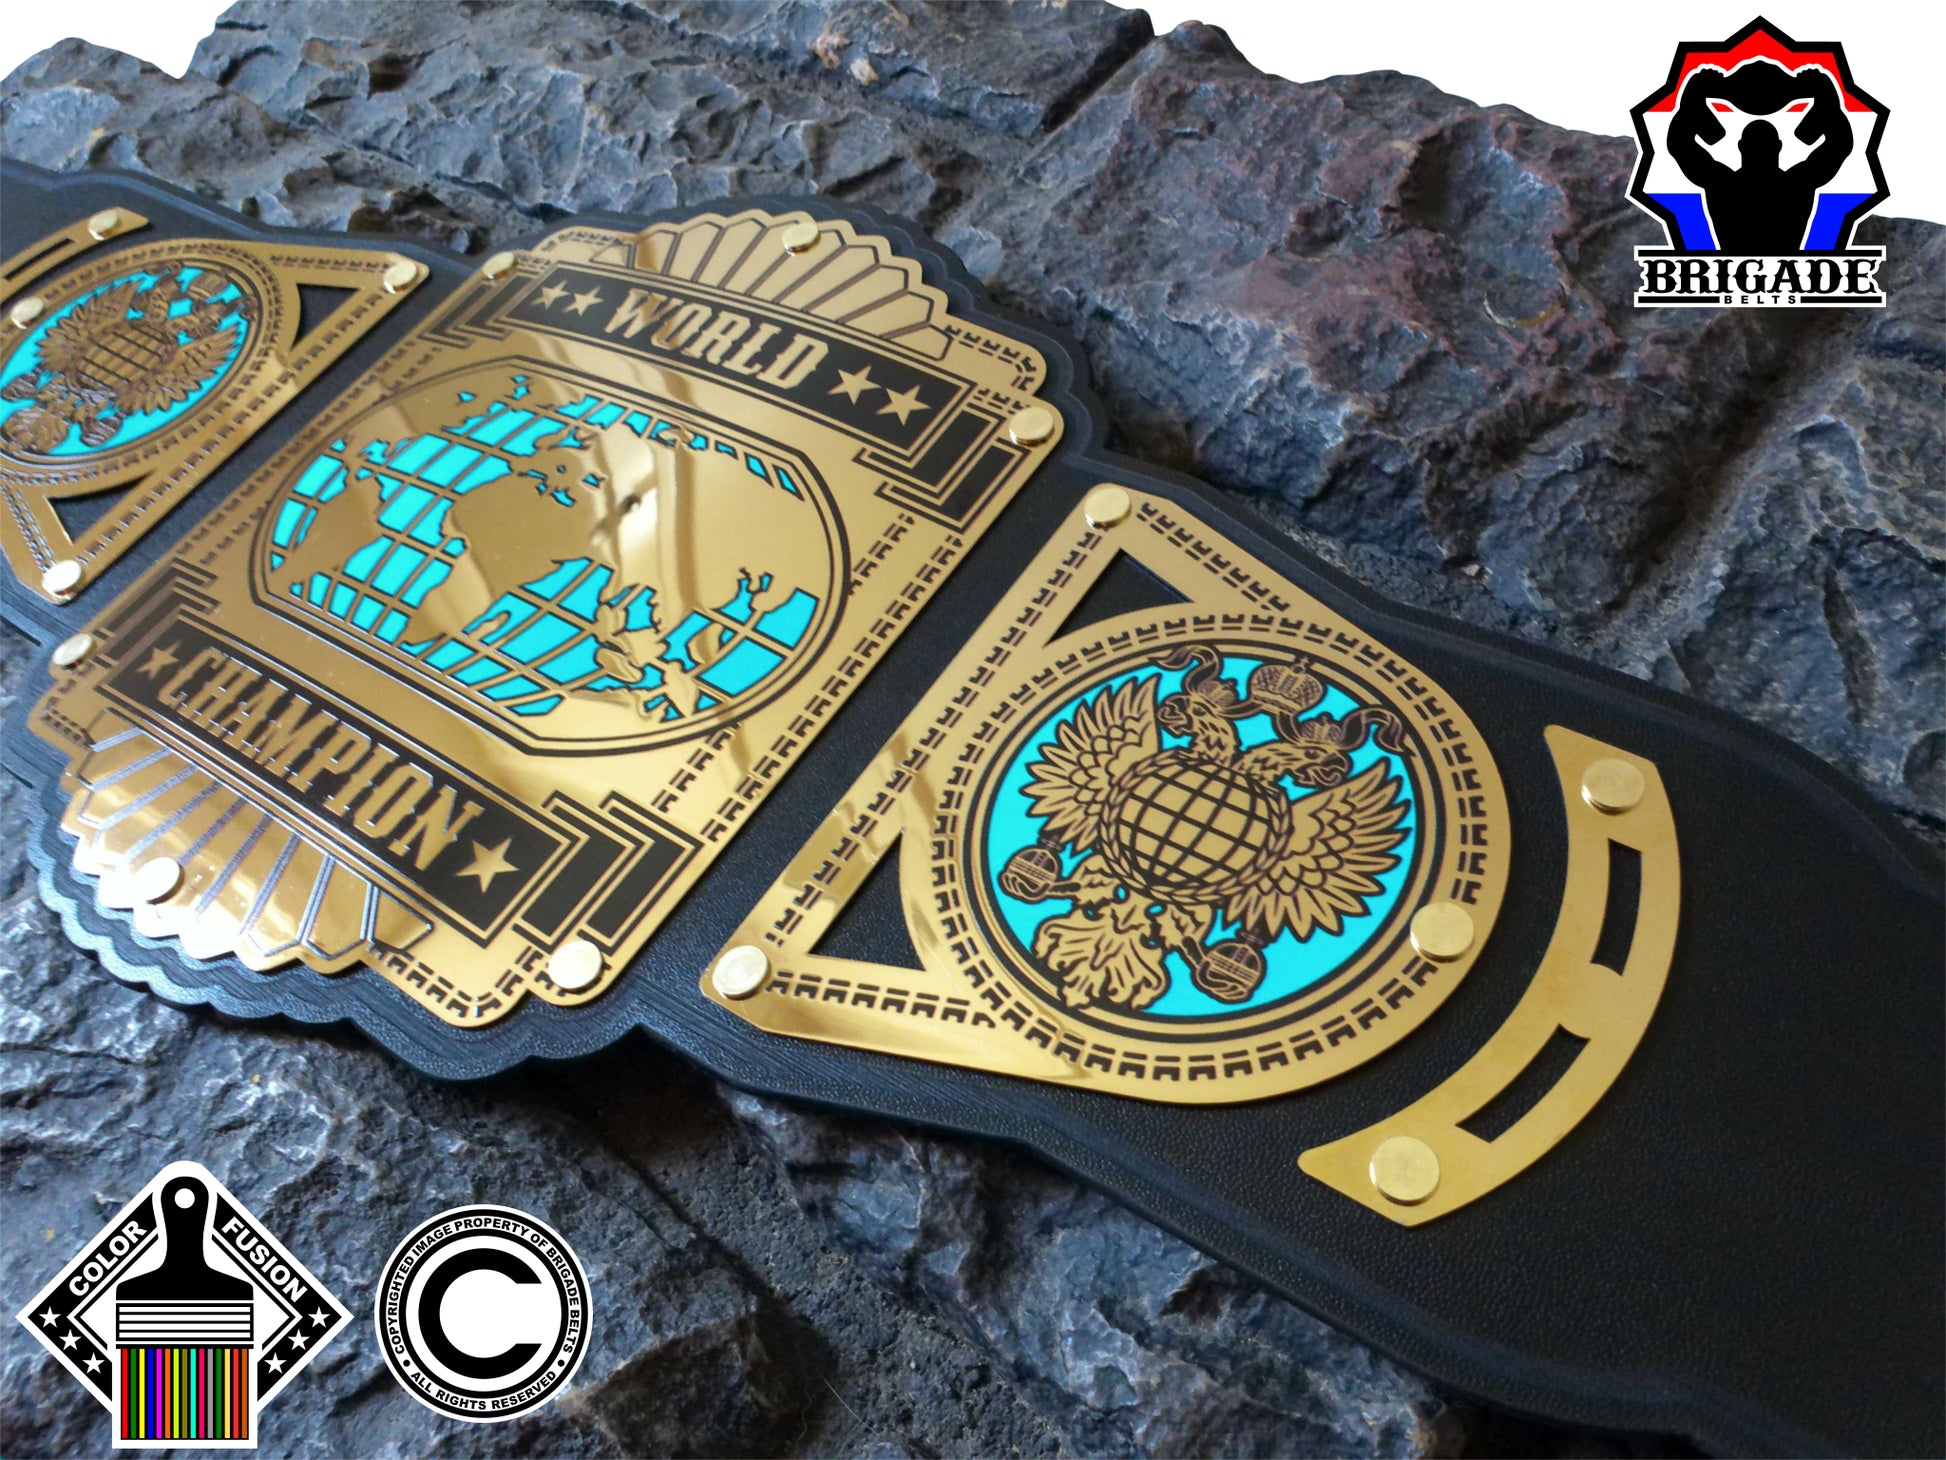 World Champion Belt - Renegade Series - Gold